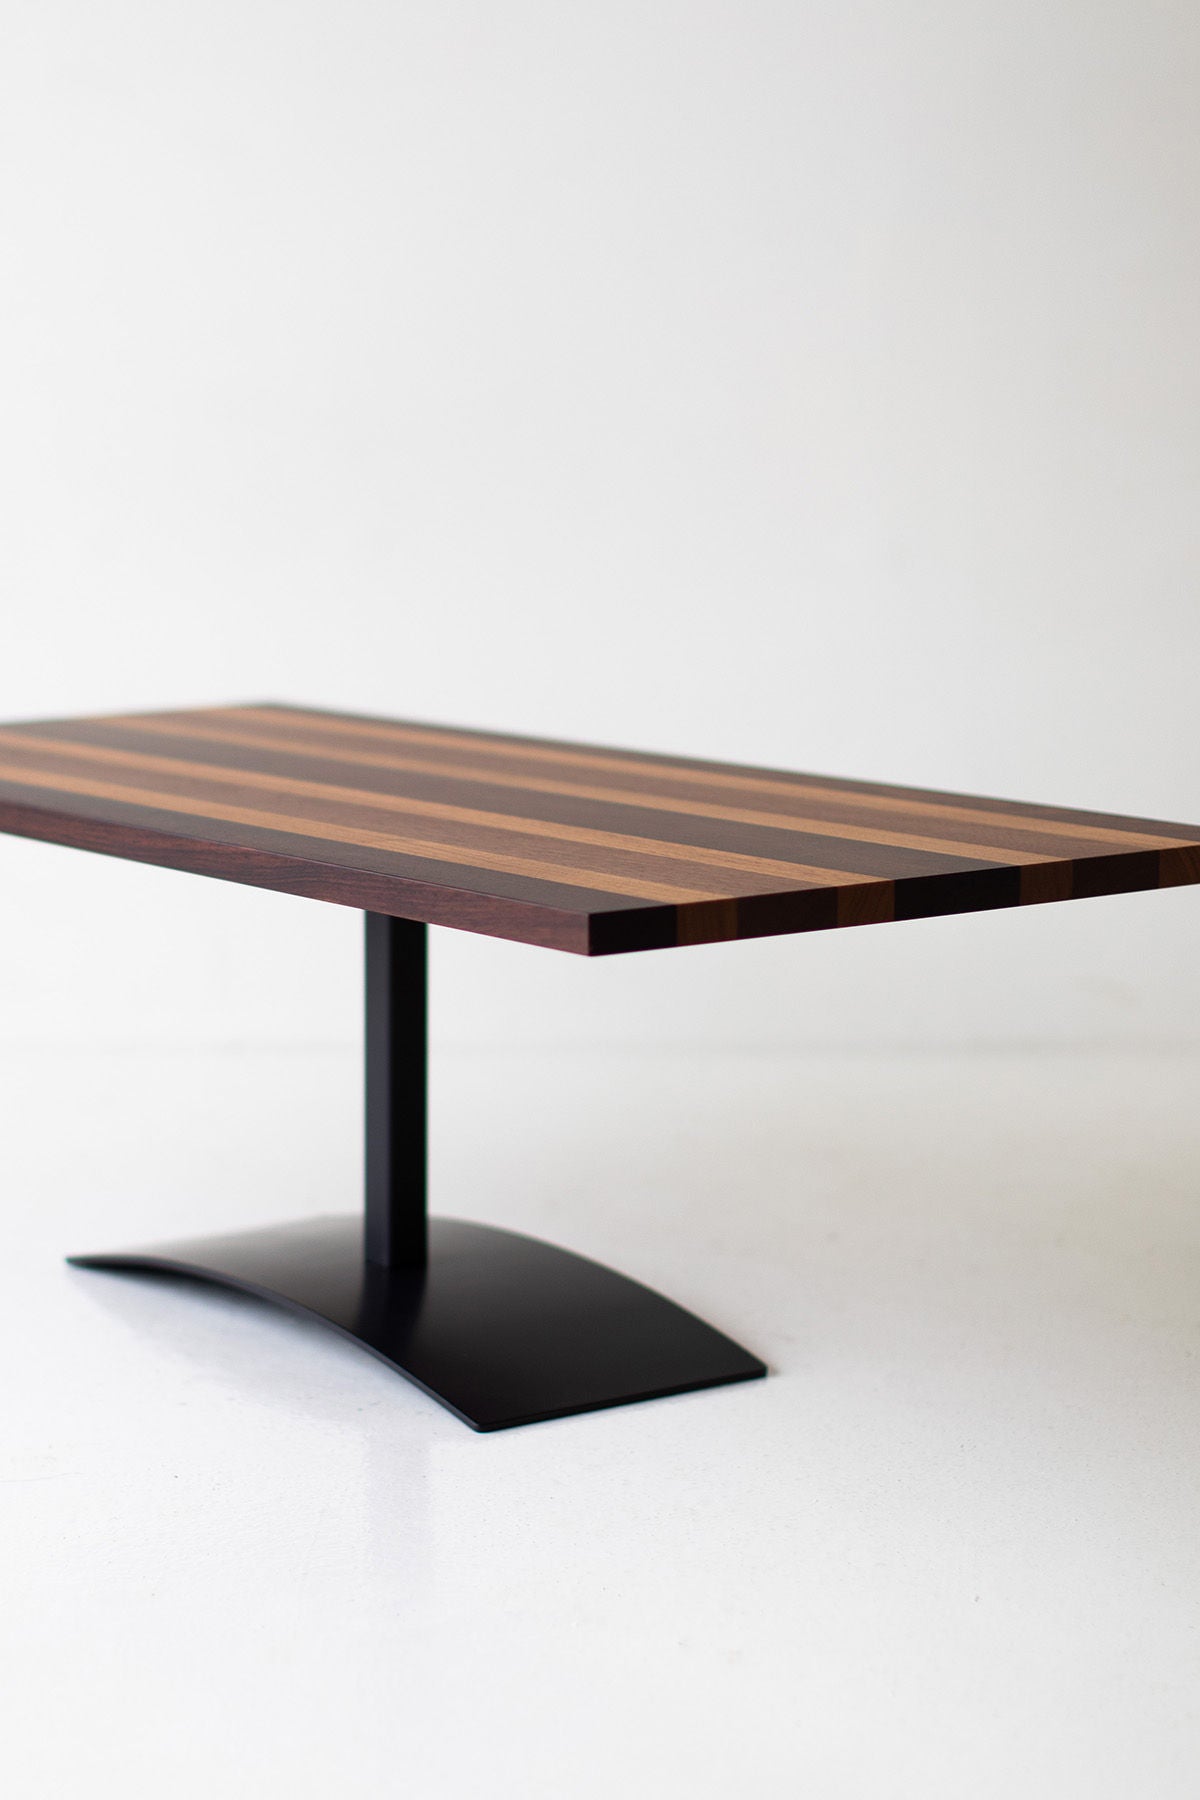 Milo-Baughman-Striped-Top-Coffee-Table-393S-04